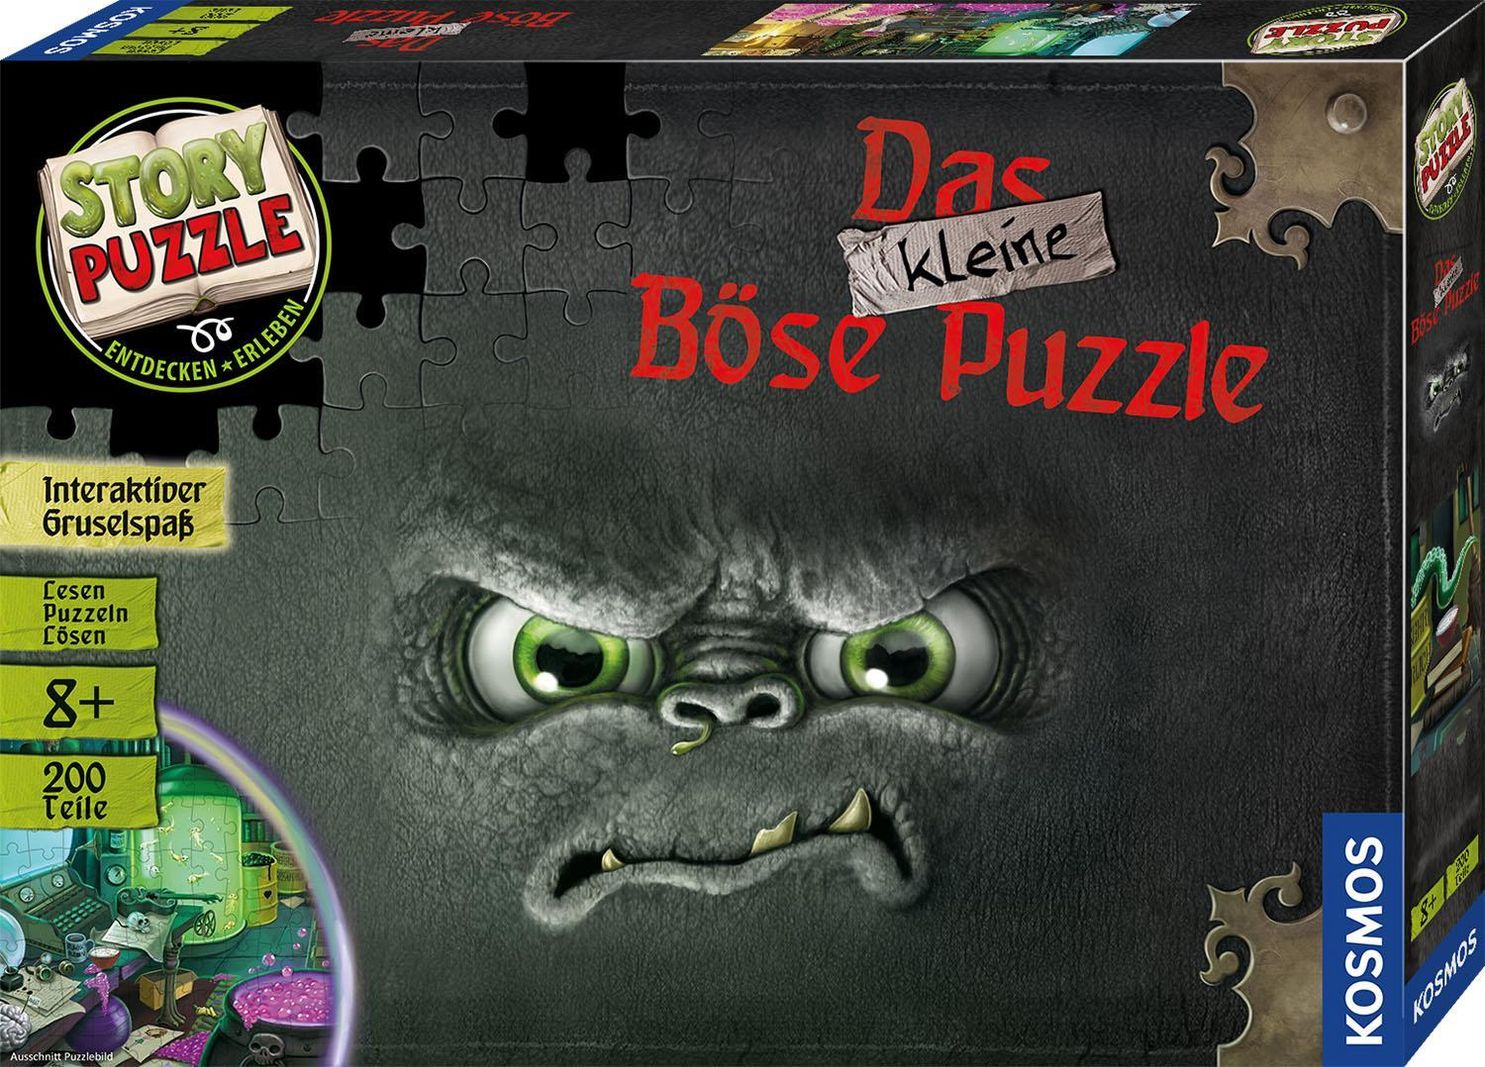 Story Puzzle: Das kleine Böse Puzzle 200-teilig | Weltbild.ch